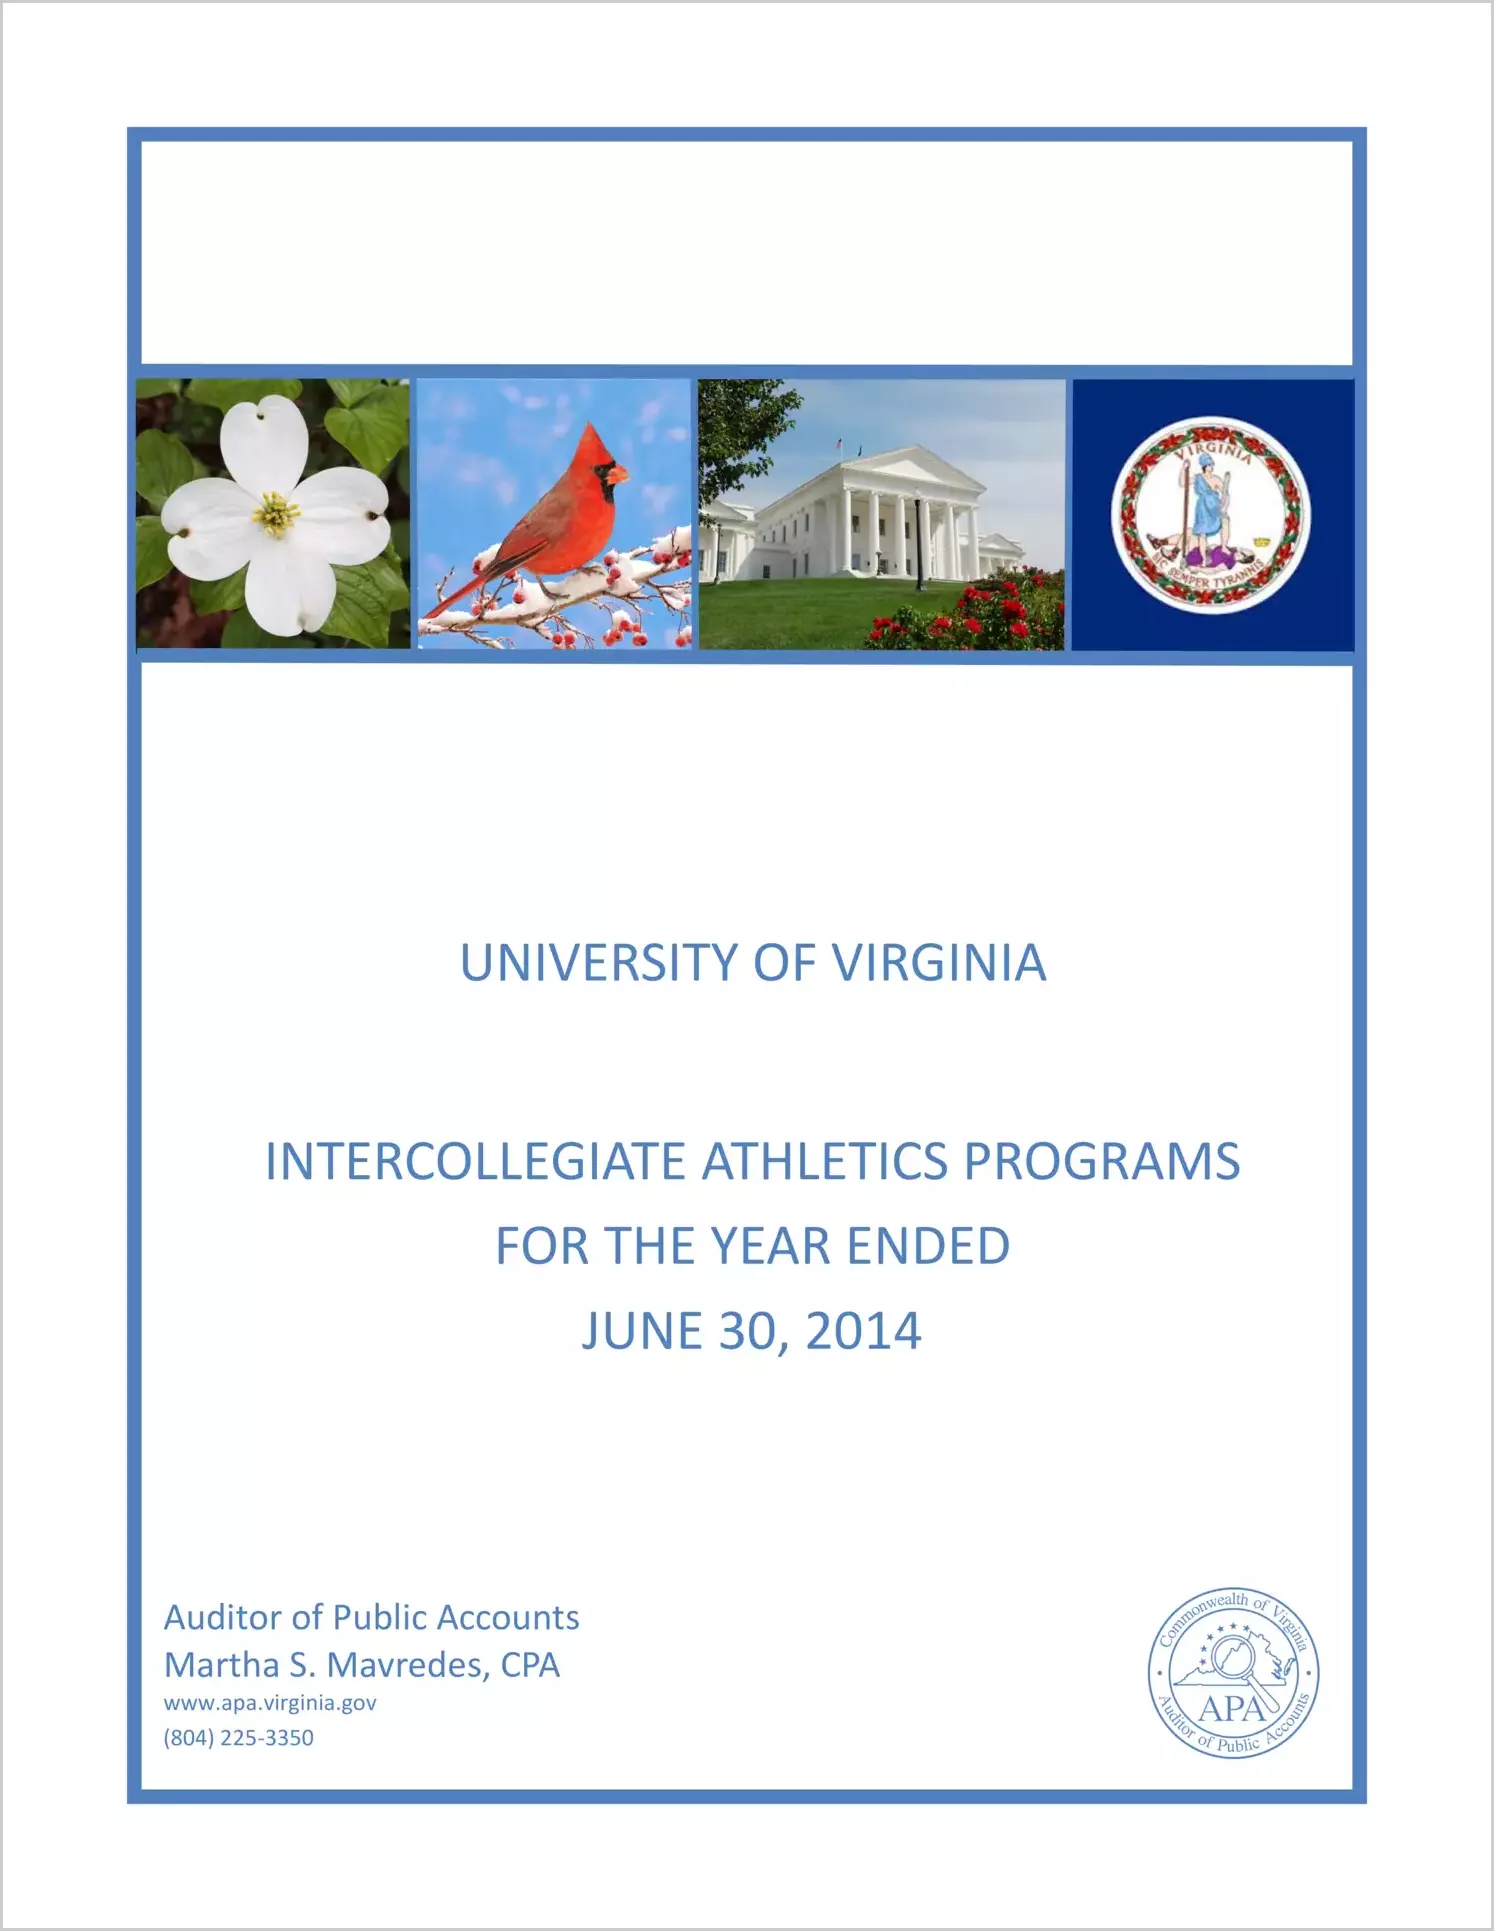 University of Virginia Intercollegiate Athletics Programs for the year ended June 30, 2014